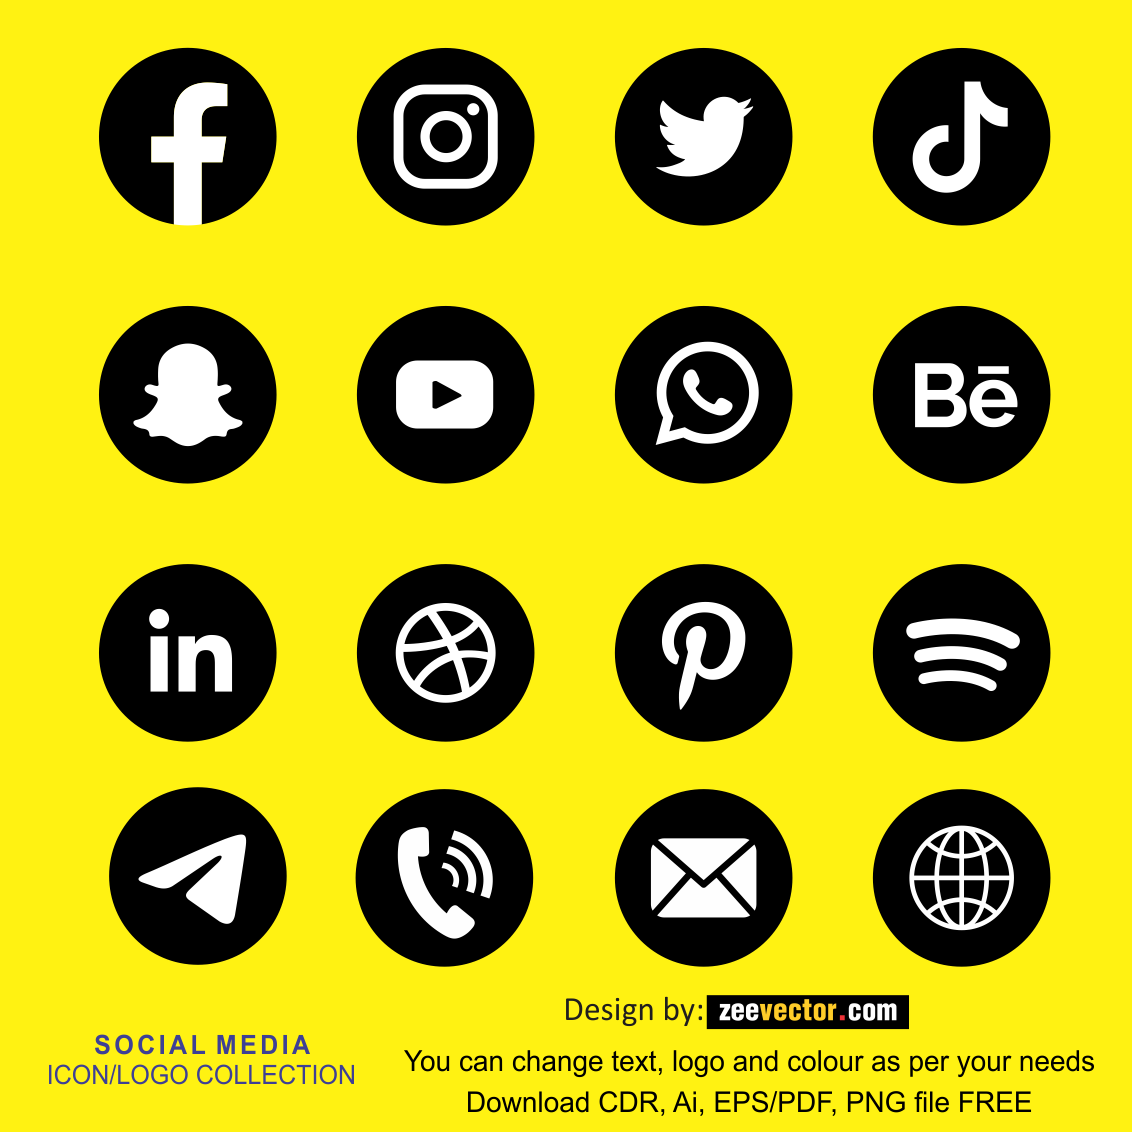 Mutuo Descifrar palanca Social Media Icons Vector Free - FREE Vector Design - Cdr, Ai, EPS, PNG, SVG